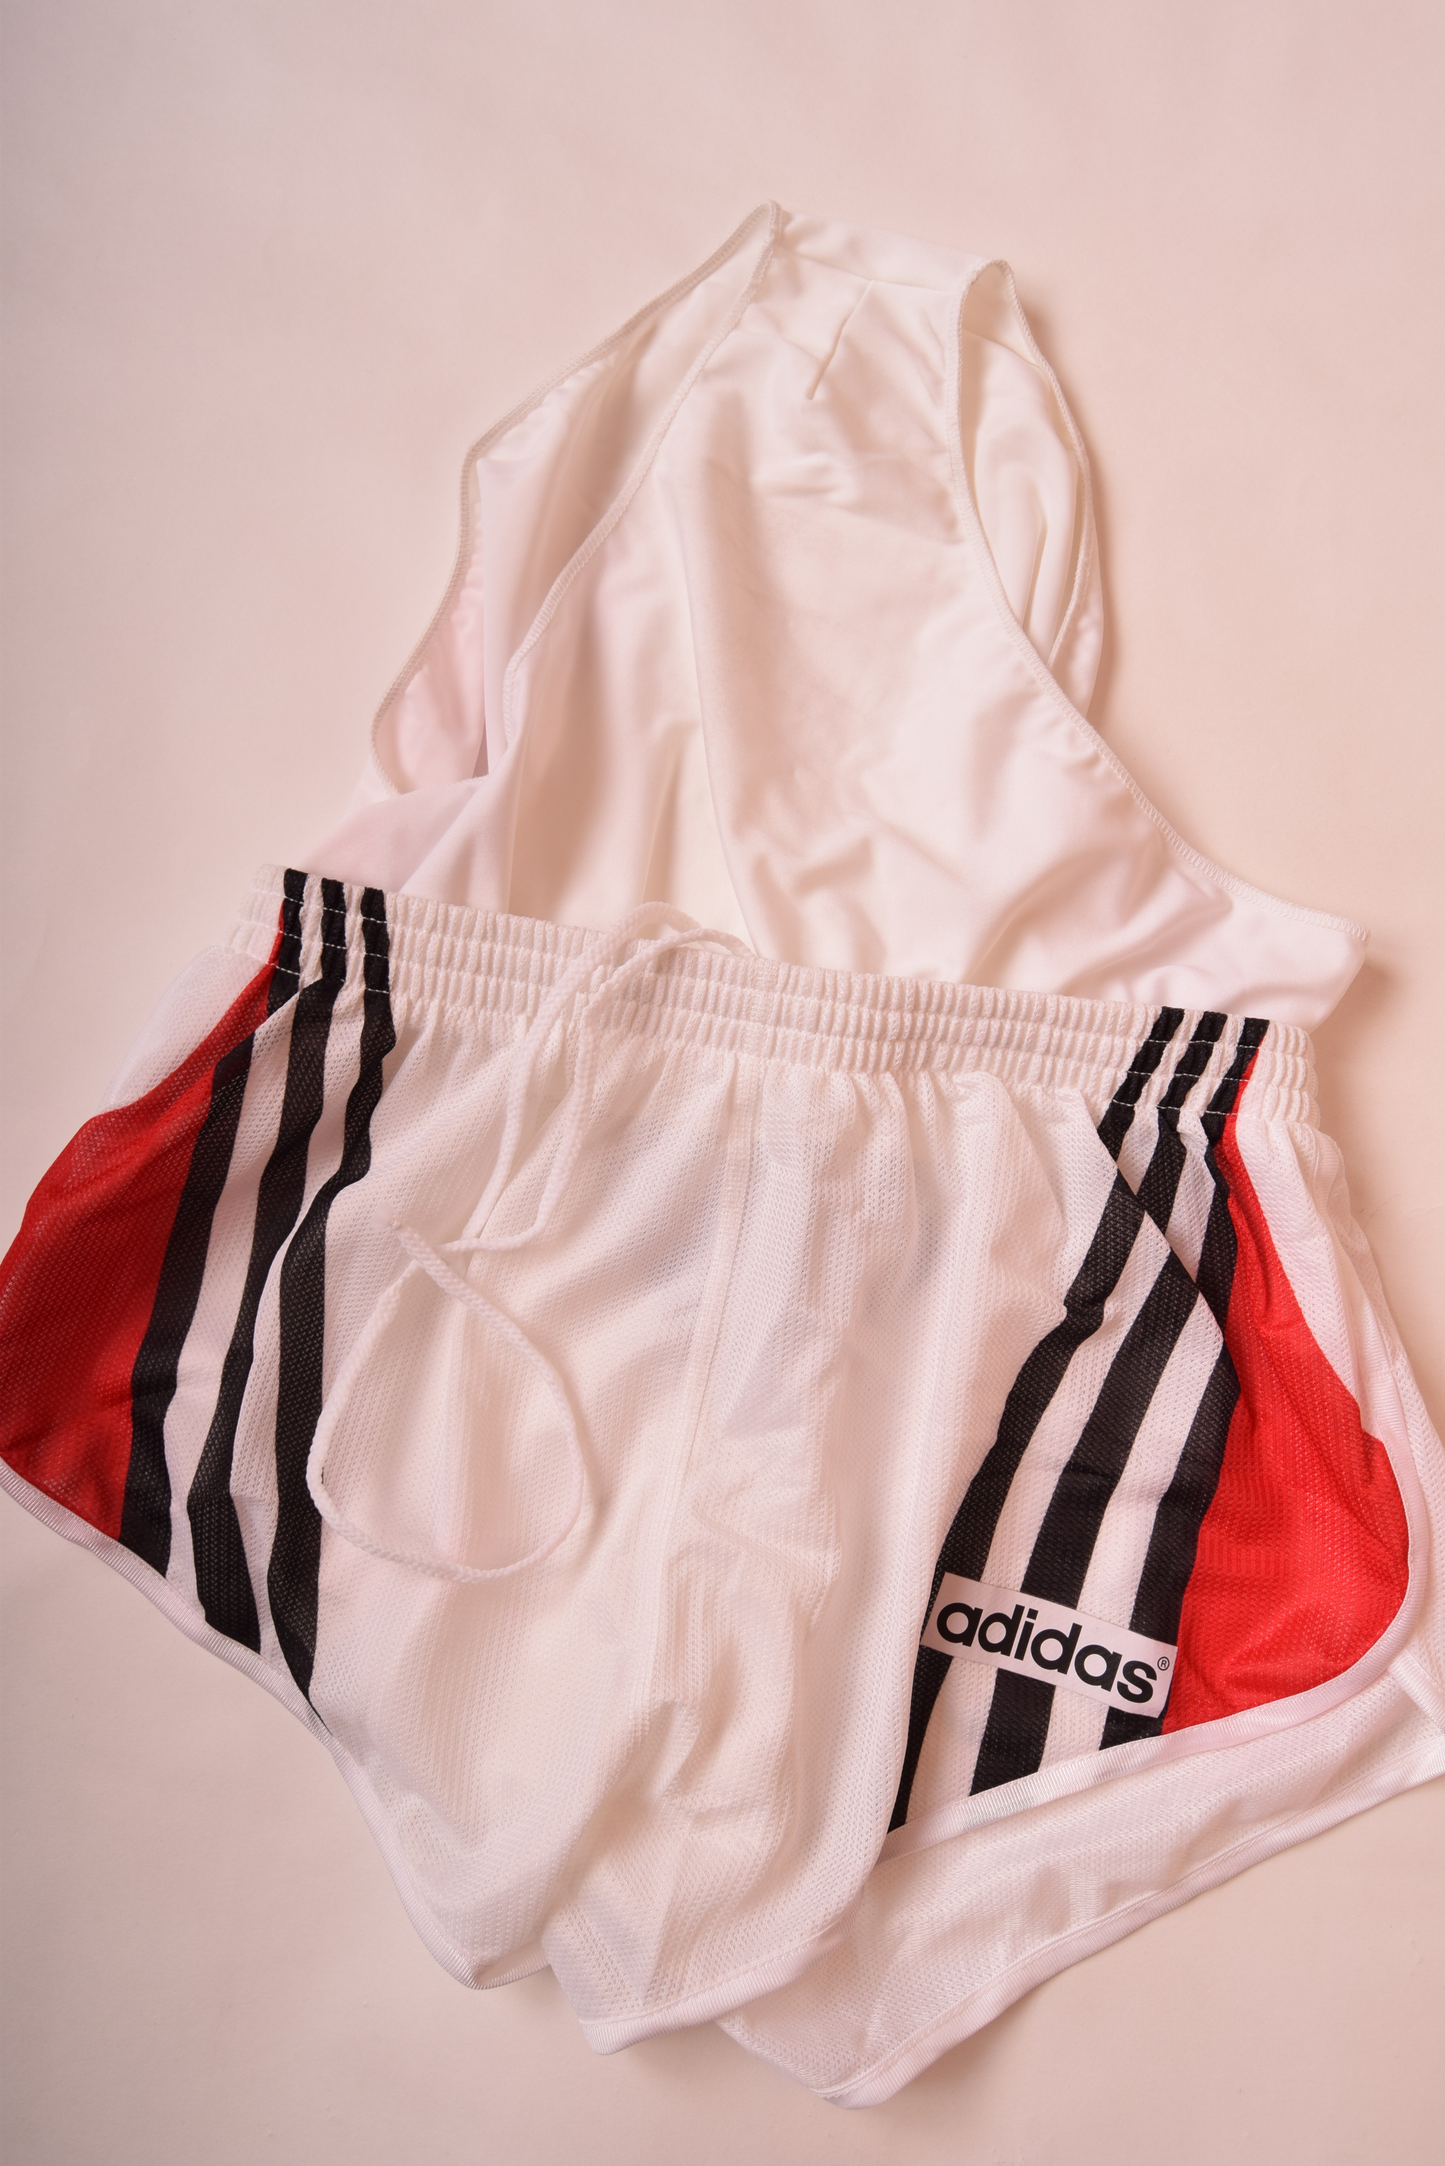 Vintage Adidas Running Shorts 90's BNWT Size M-L CoolMax